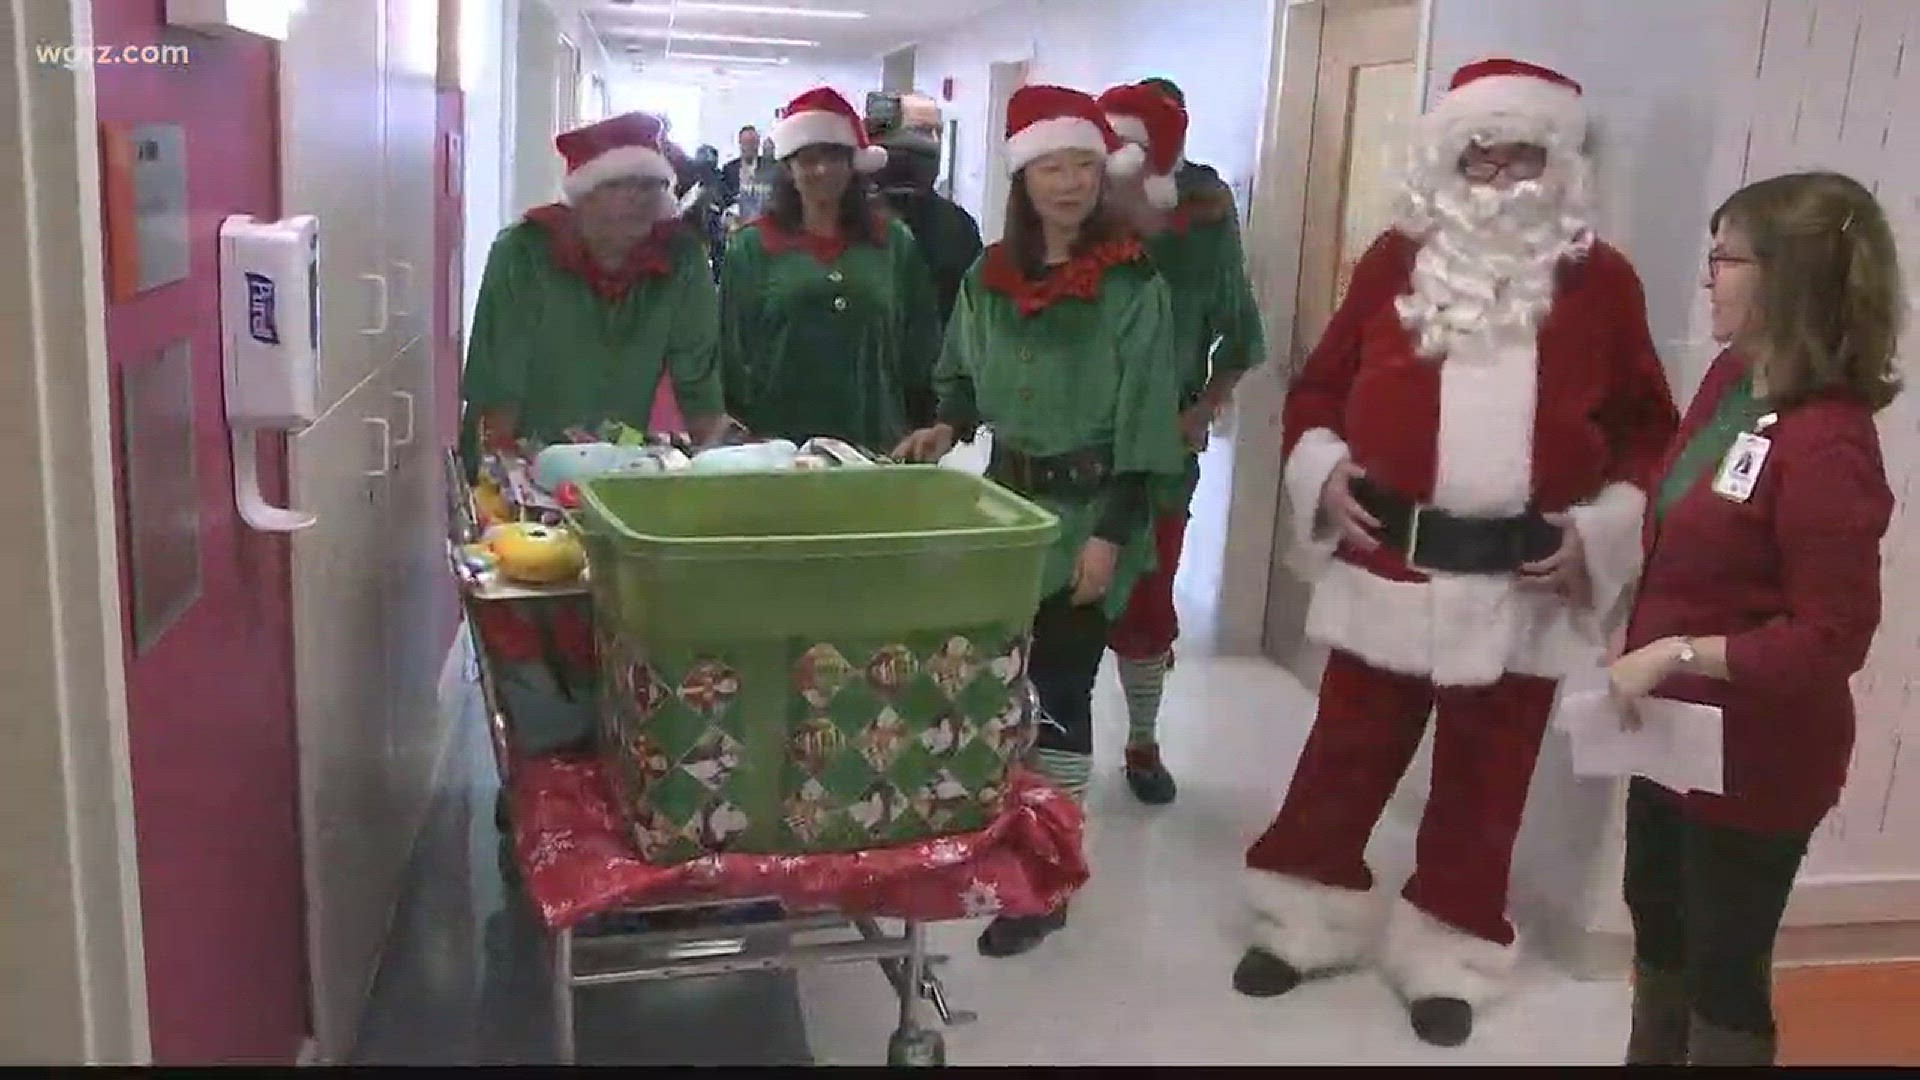 Santa Makes Deliveries At The Hospital